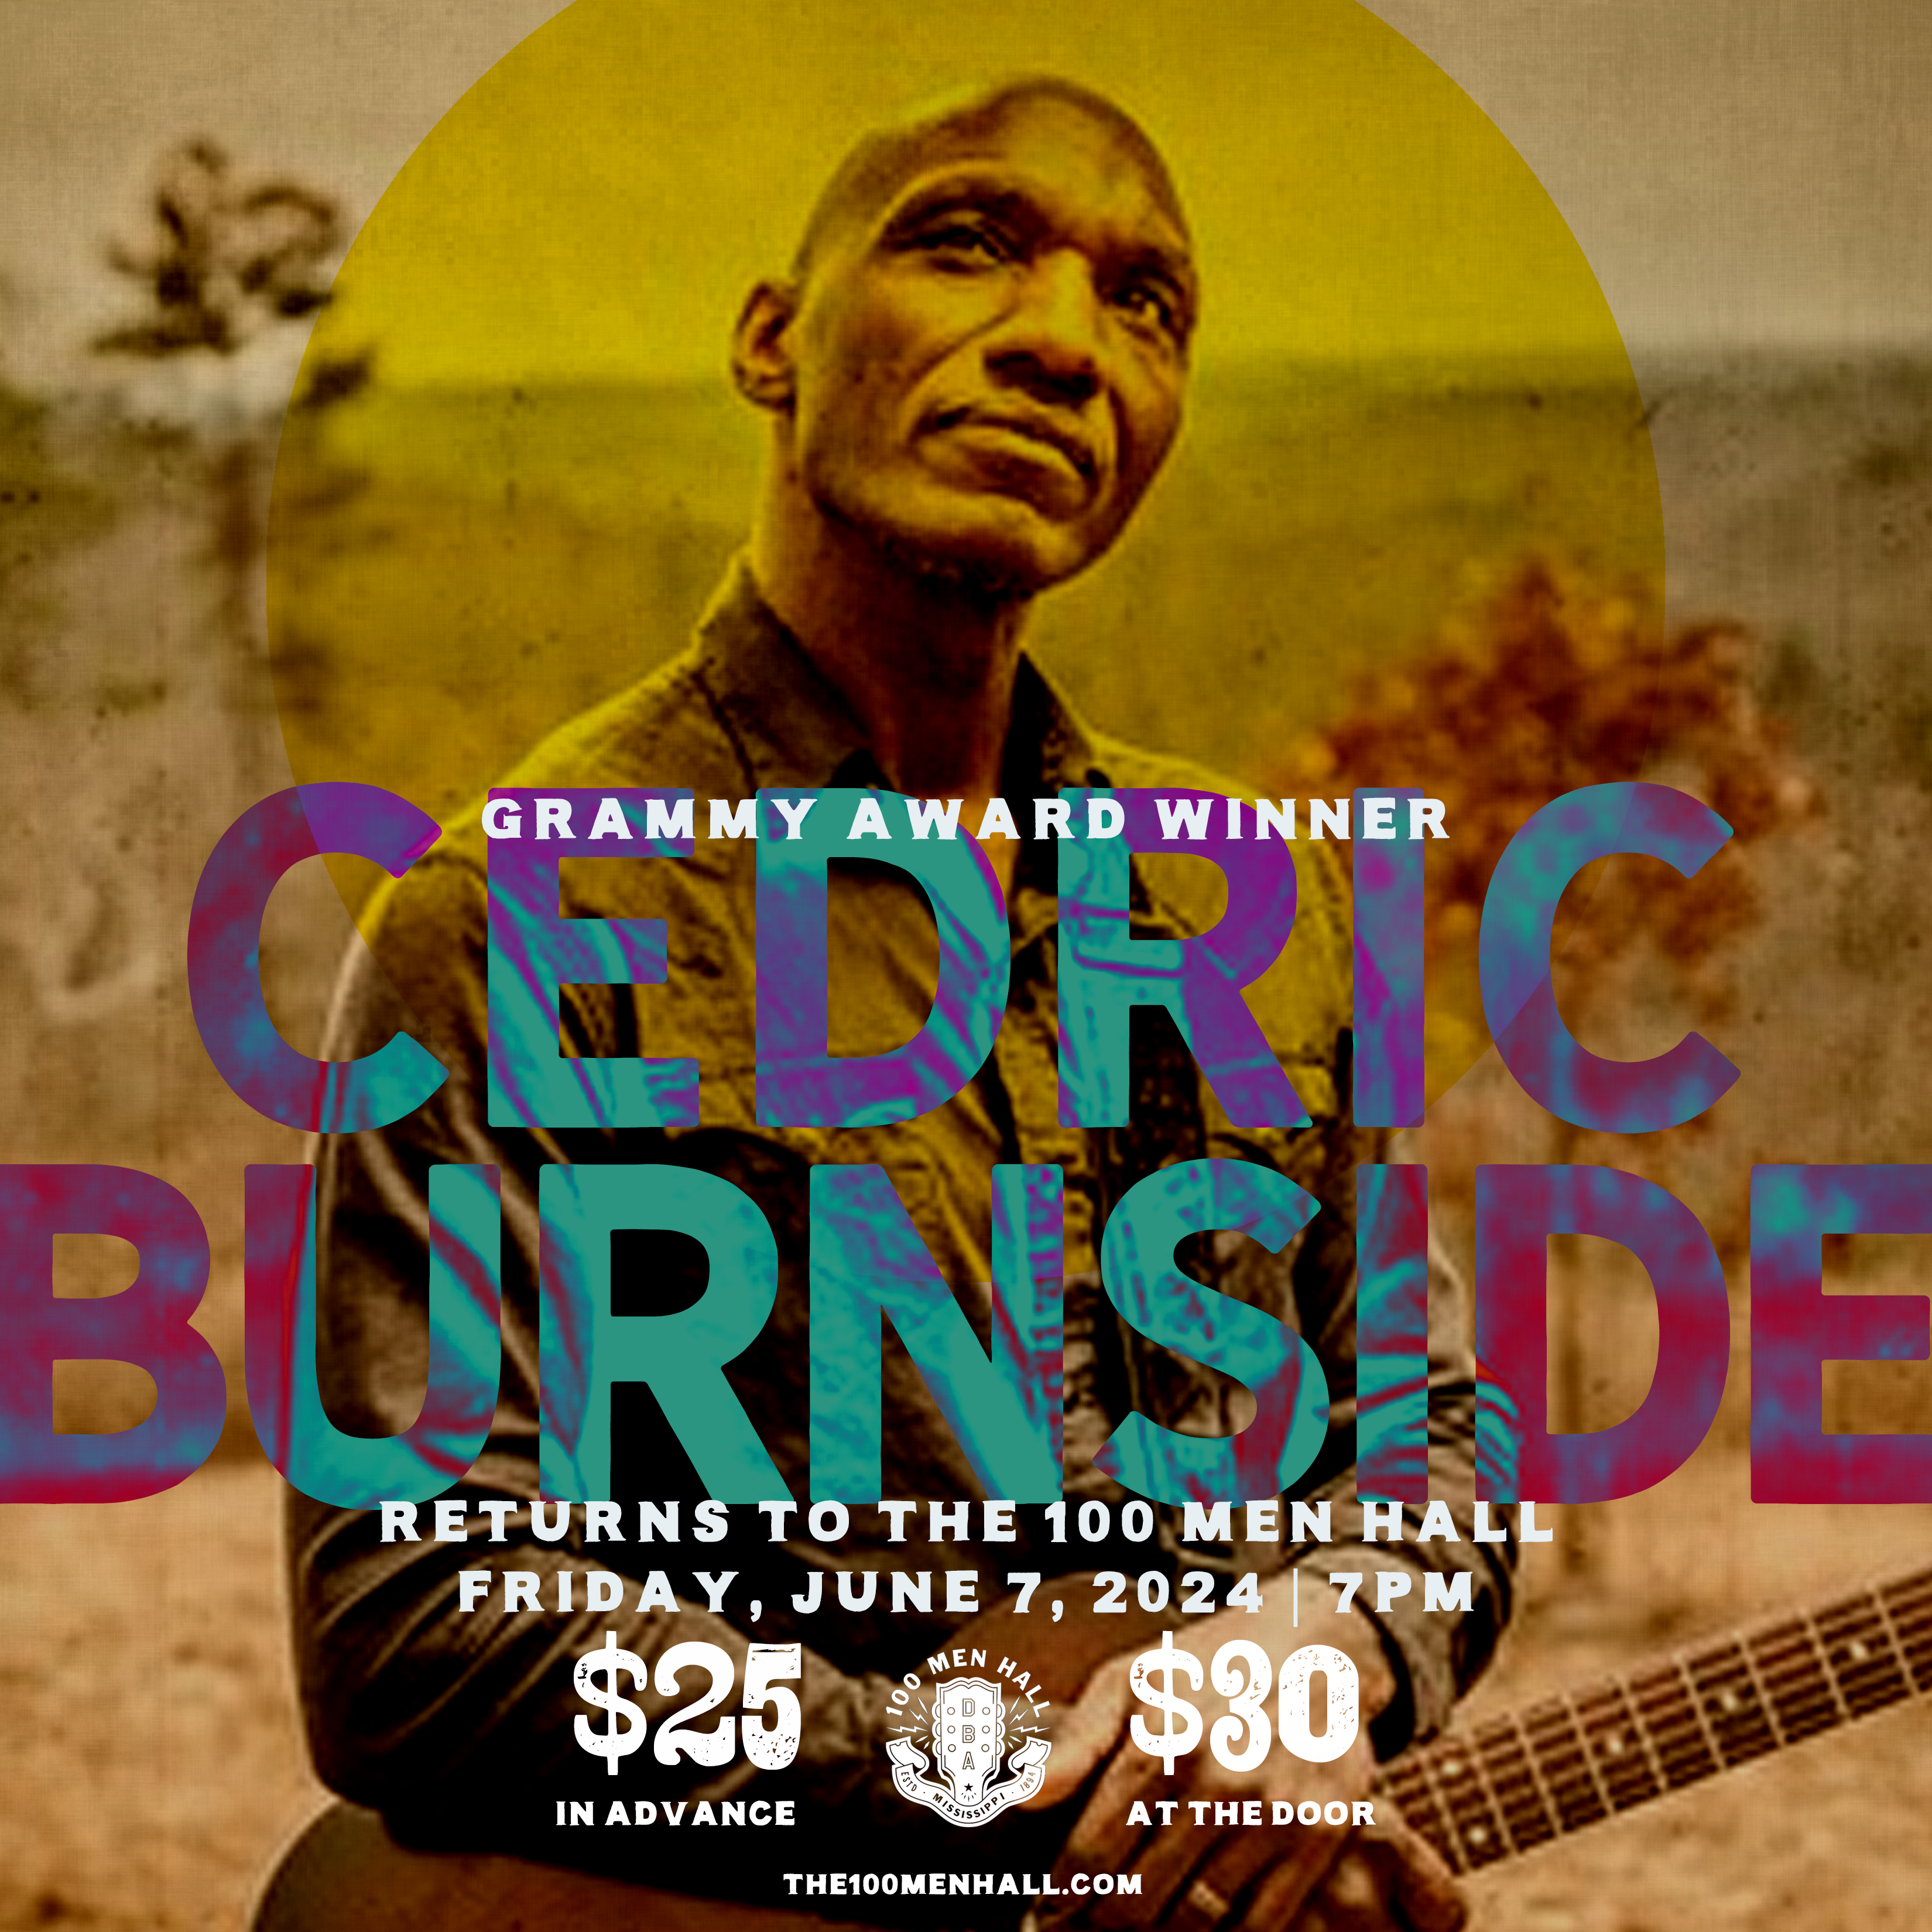 Cedric Burnside - Friday, June 7, 2024 at 7PM